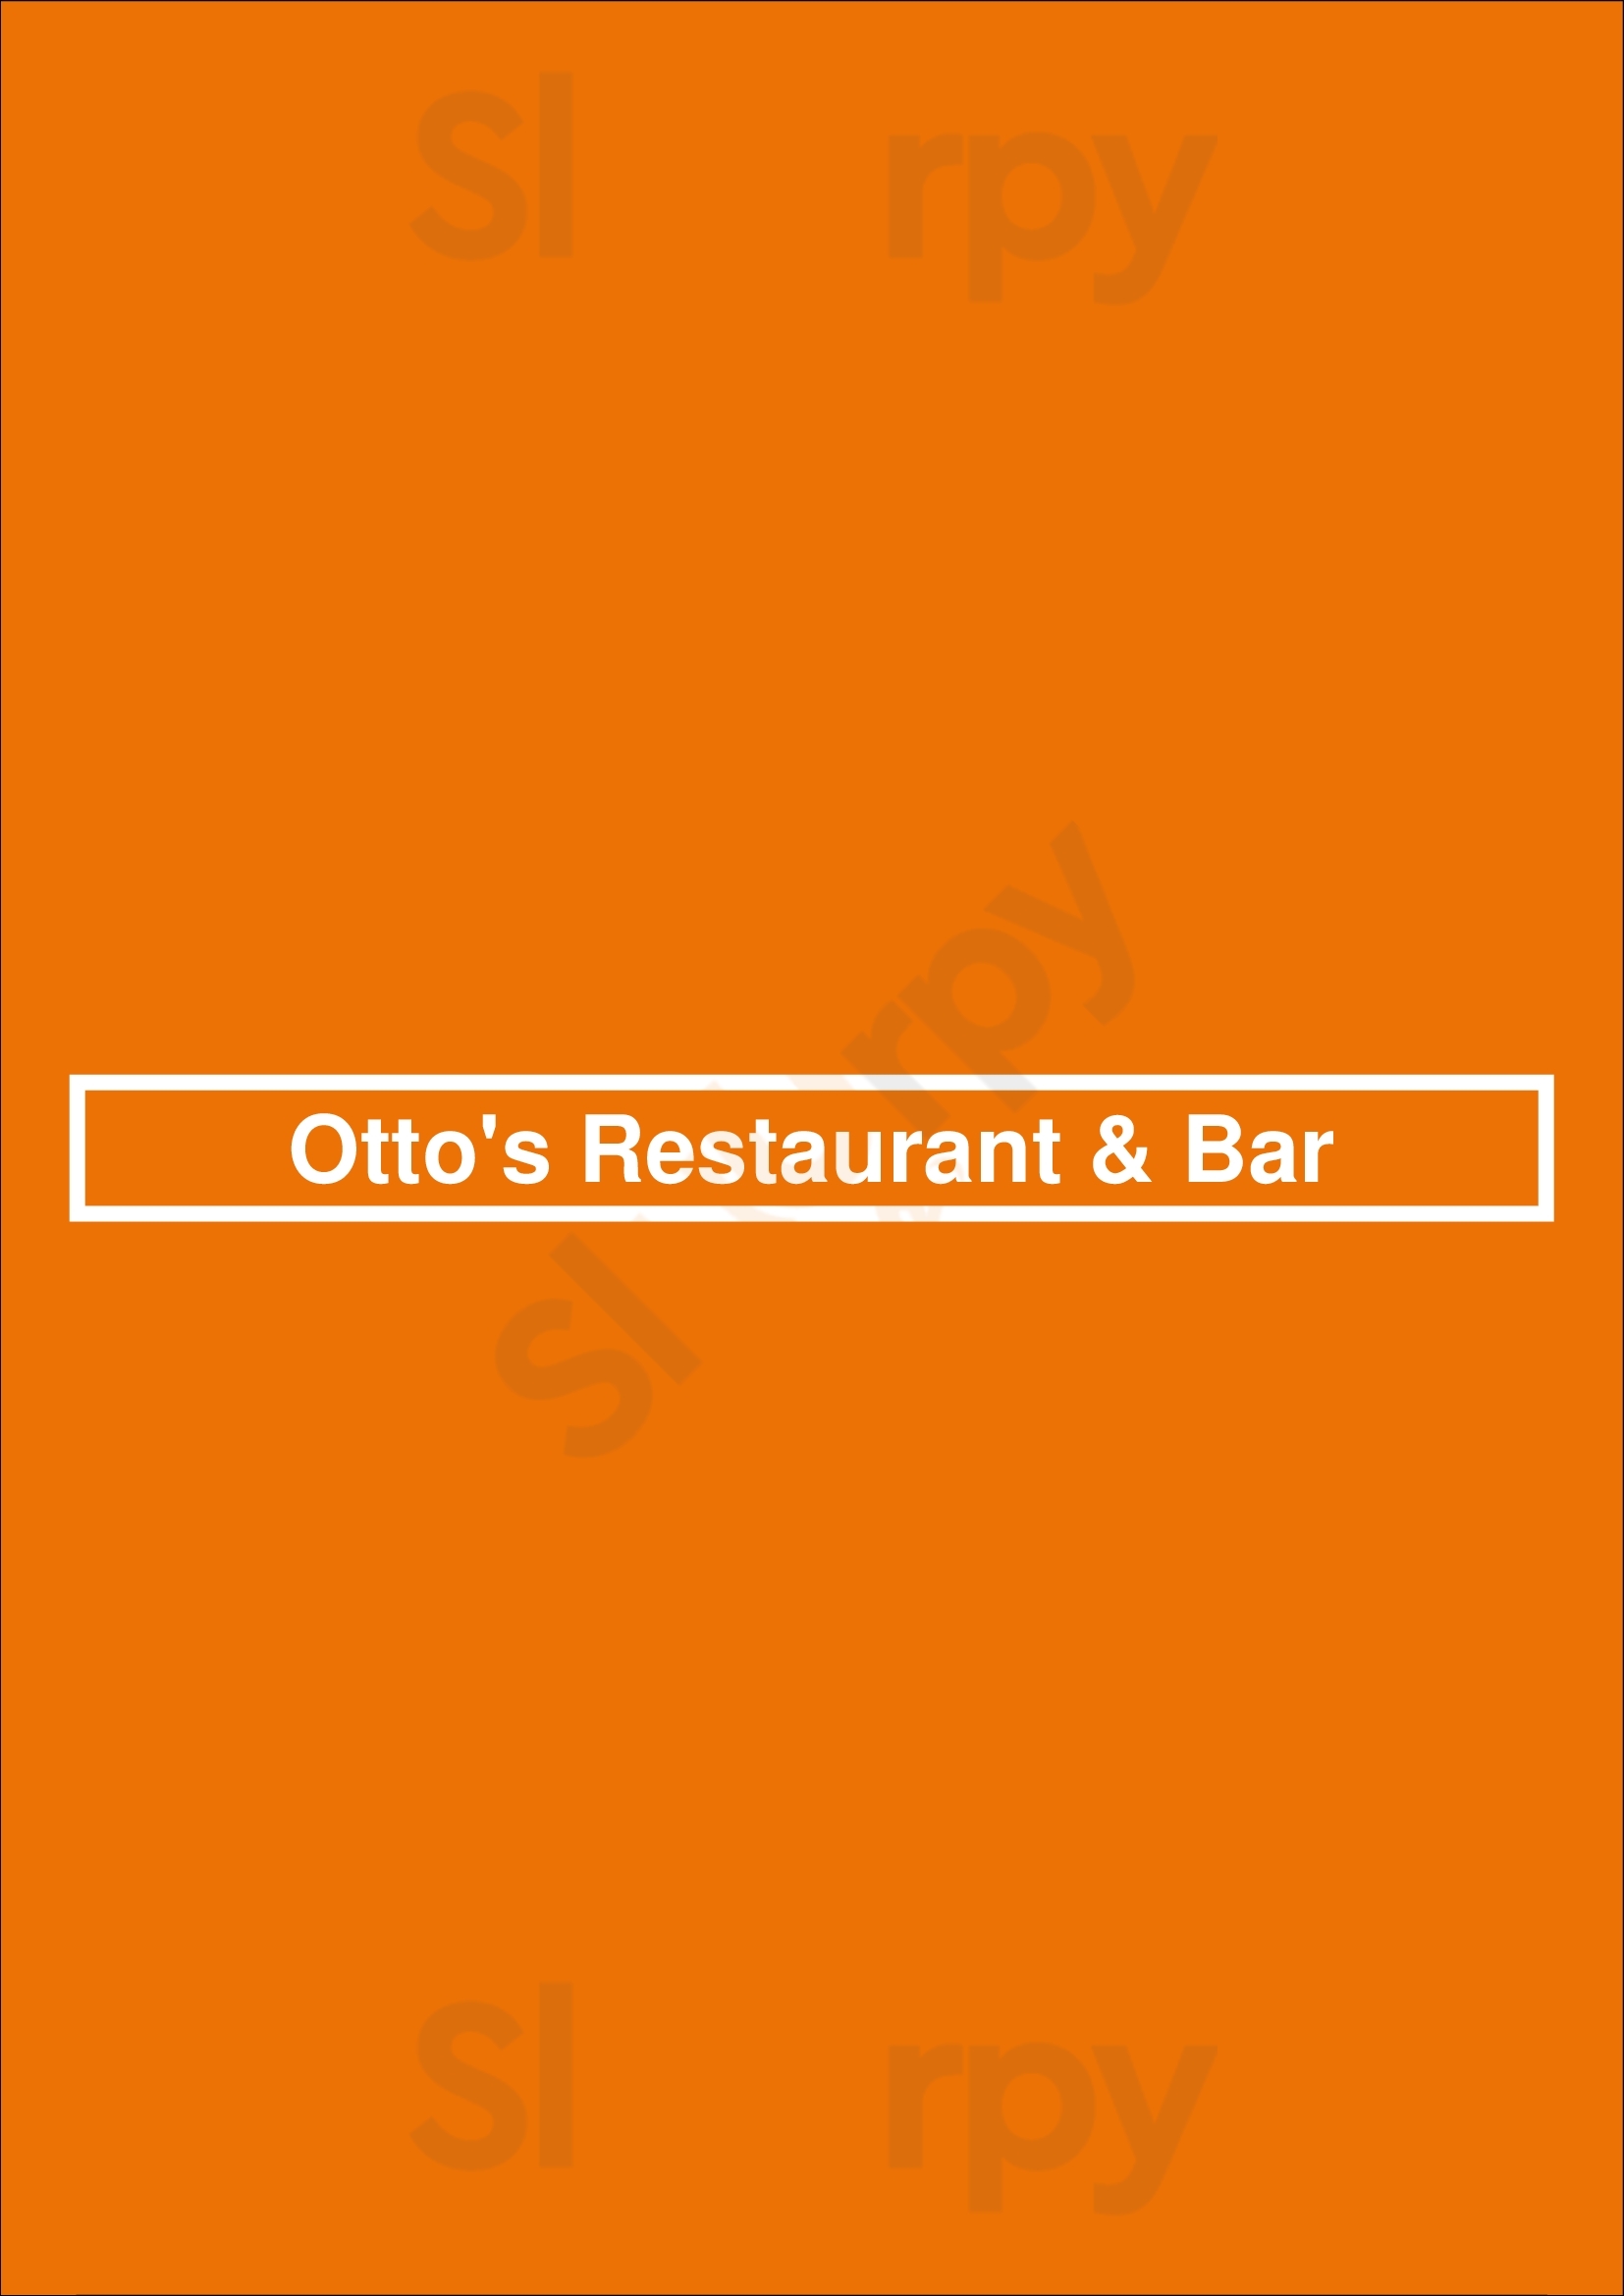 Otto's Restaurant & Bar Madison Menu - 1